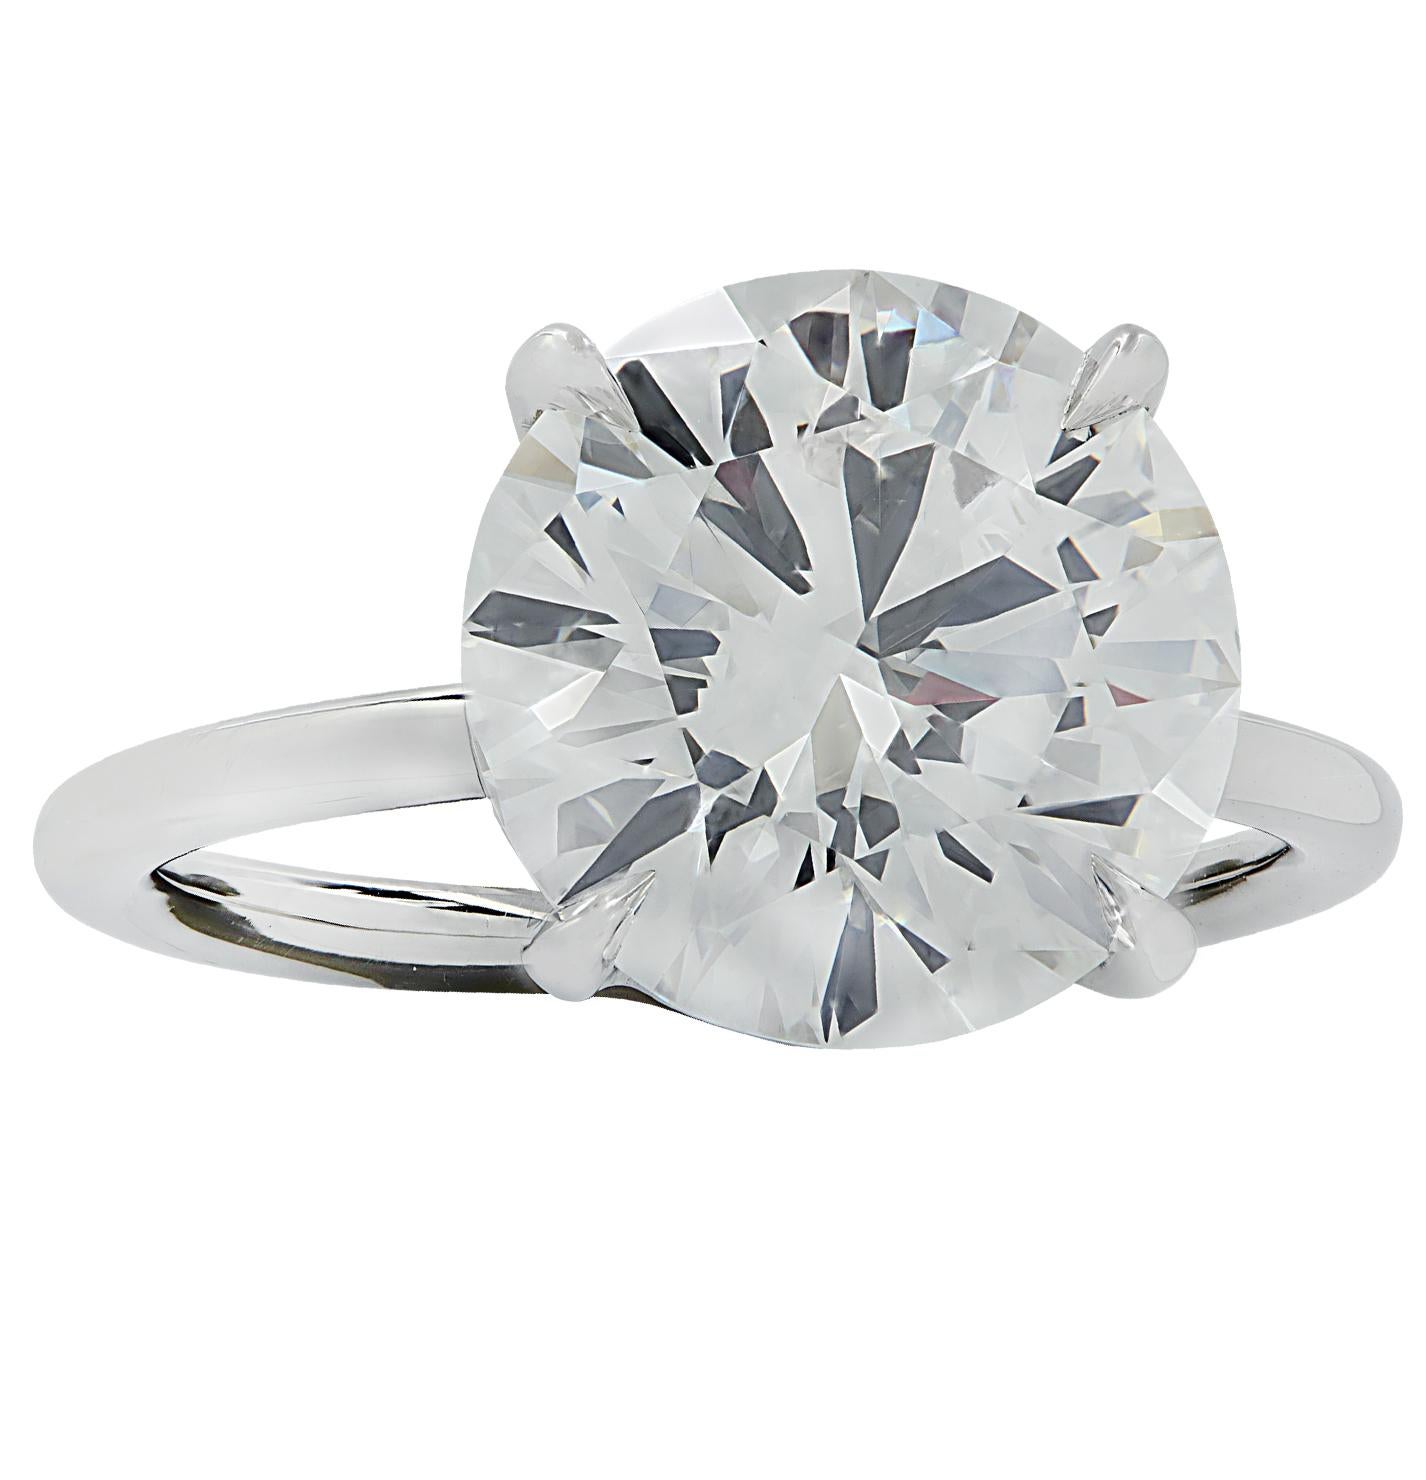 Round Cut Vivid Diamonds GIA Certified 7.48 Carat Diamond Engagement Ring For Sale